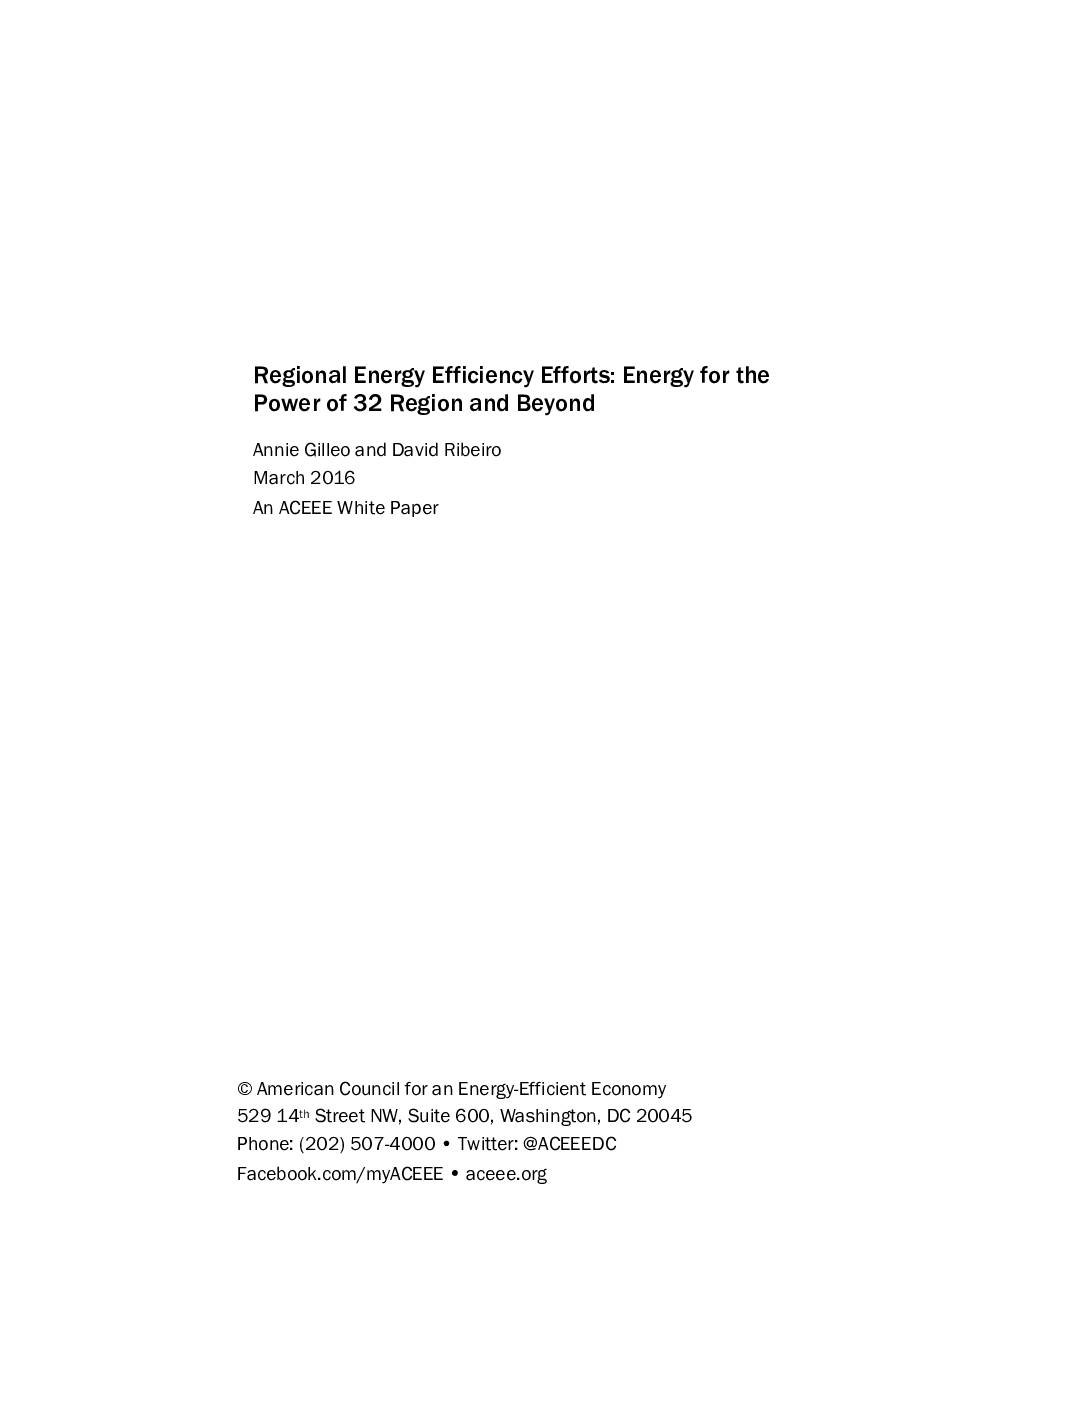 Regional Energy Efficiency Efforts: Energy for the Power of 32 Region and Beyond